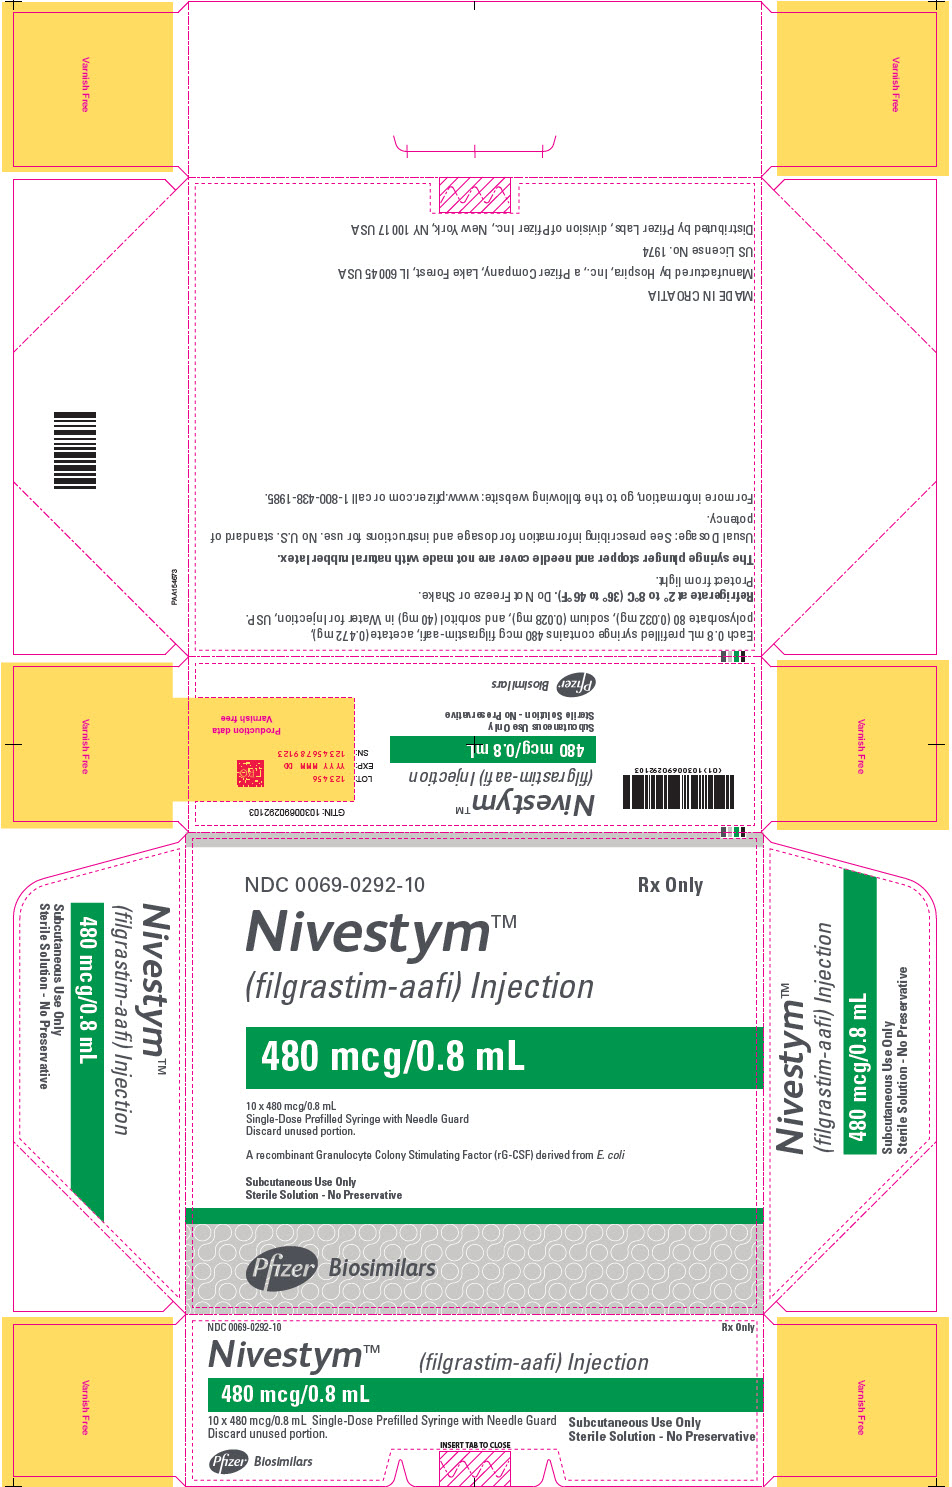 PRINCIPAL DISPLAY PANEL - 0.8 mL Syringe Carton - NDC 0069-0292-10